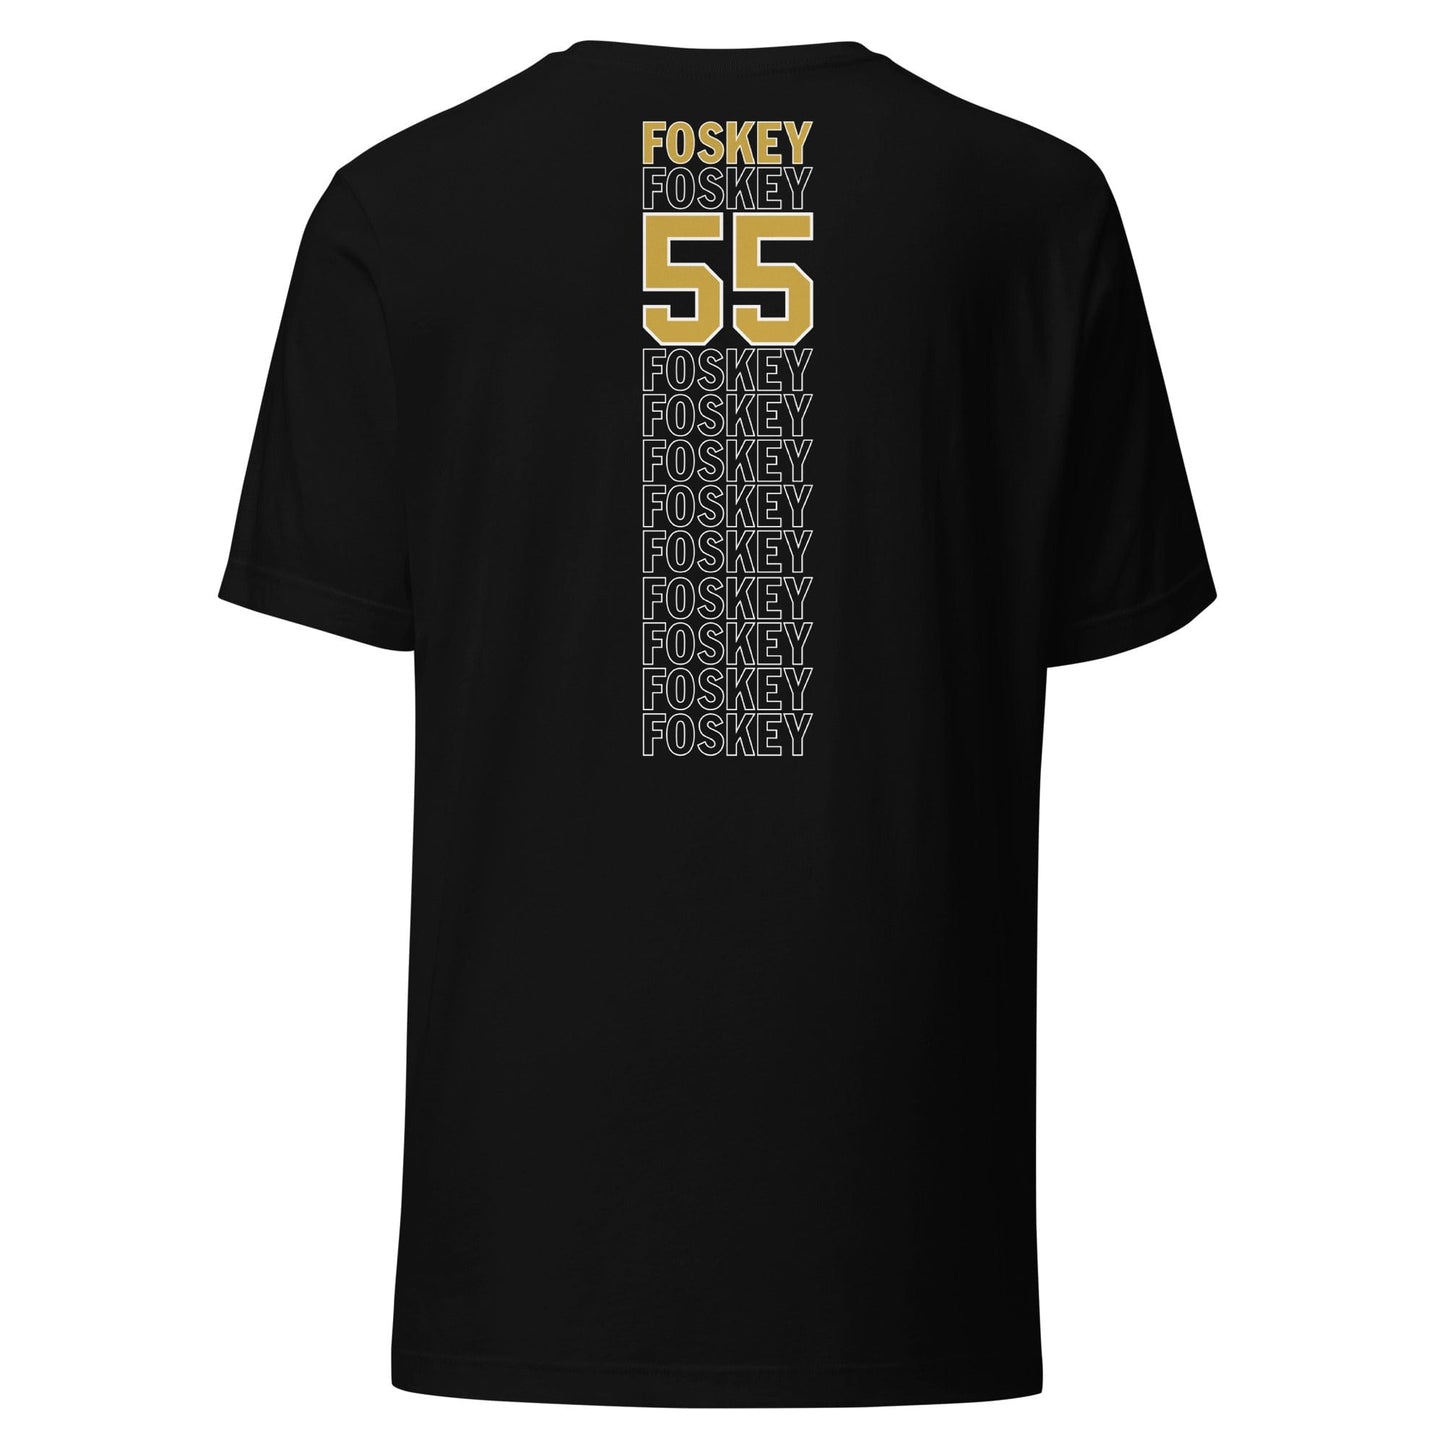 55 Is the Key T-Shirt - Black